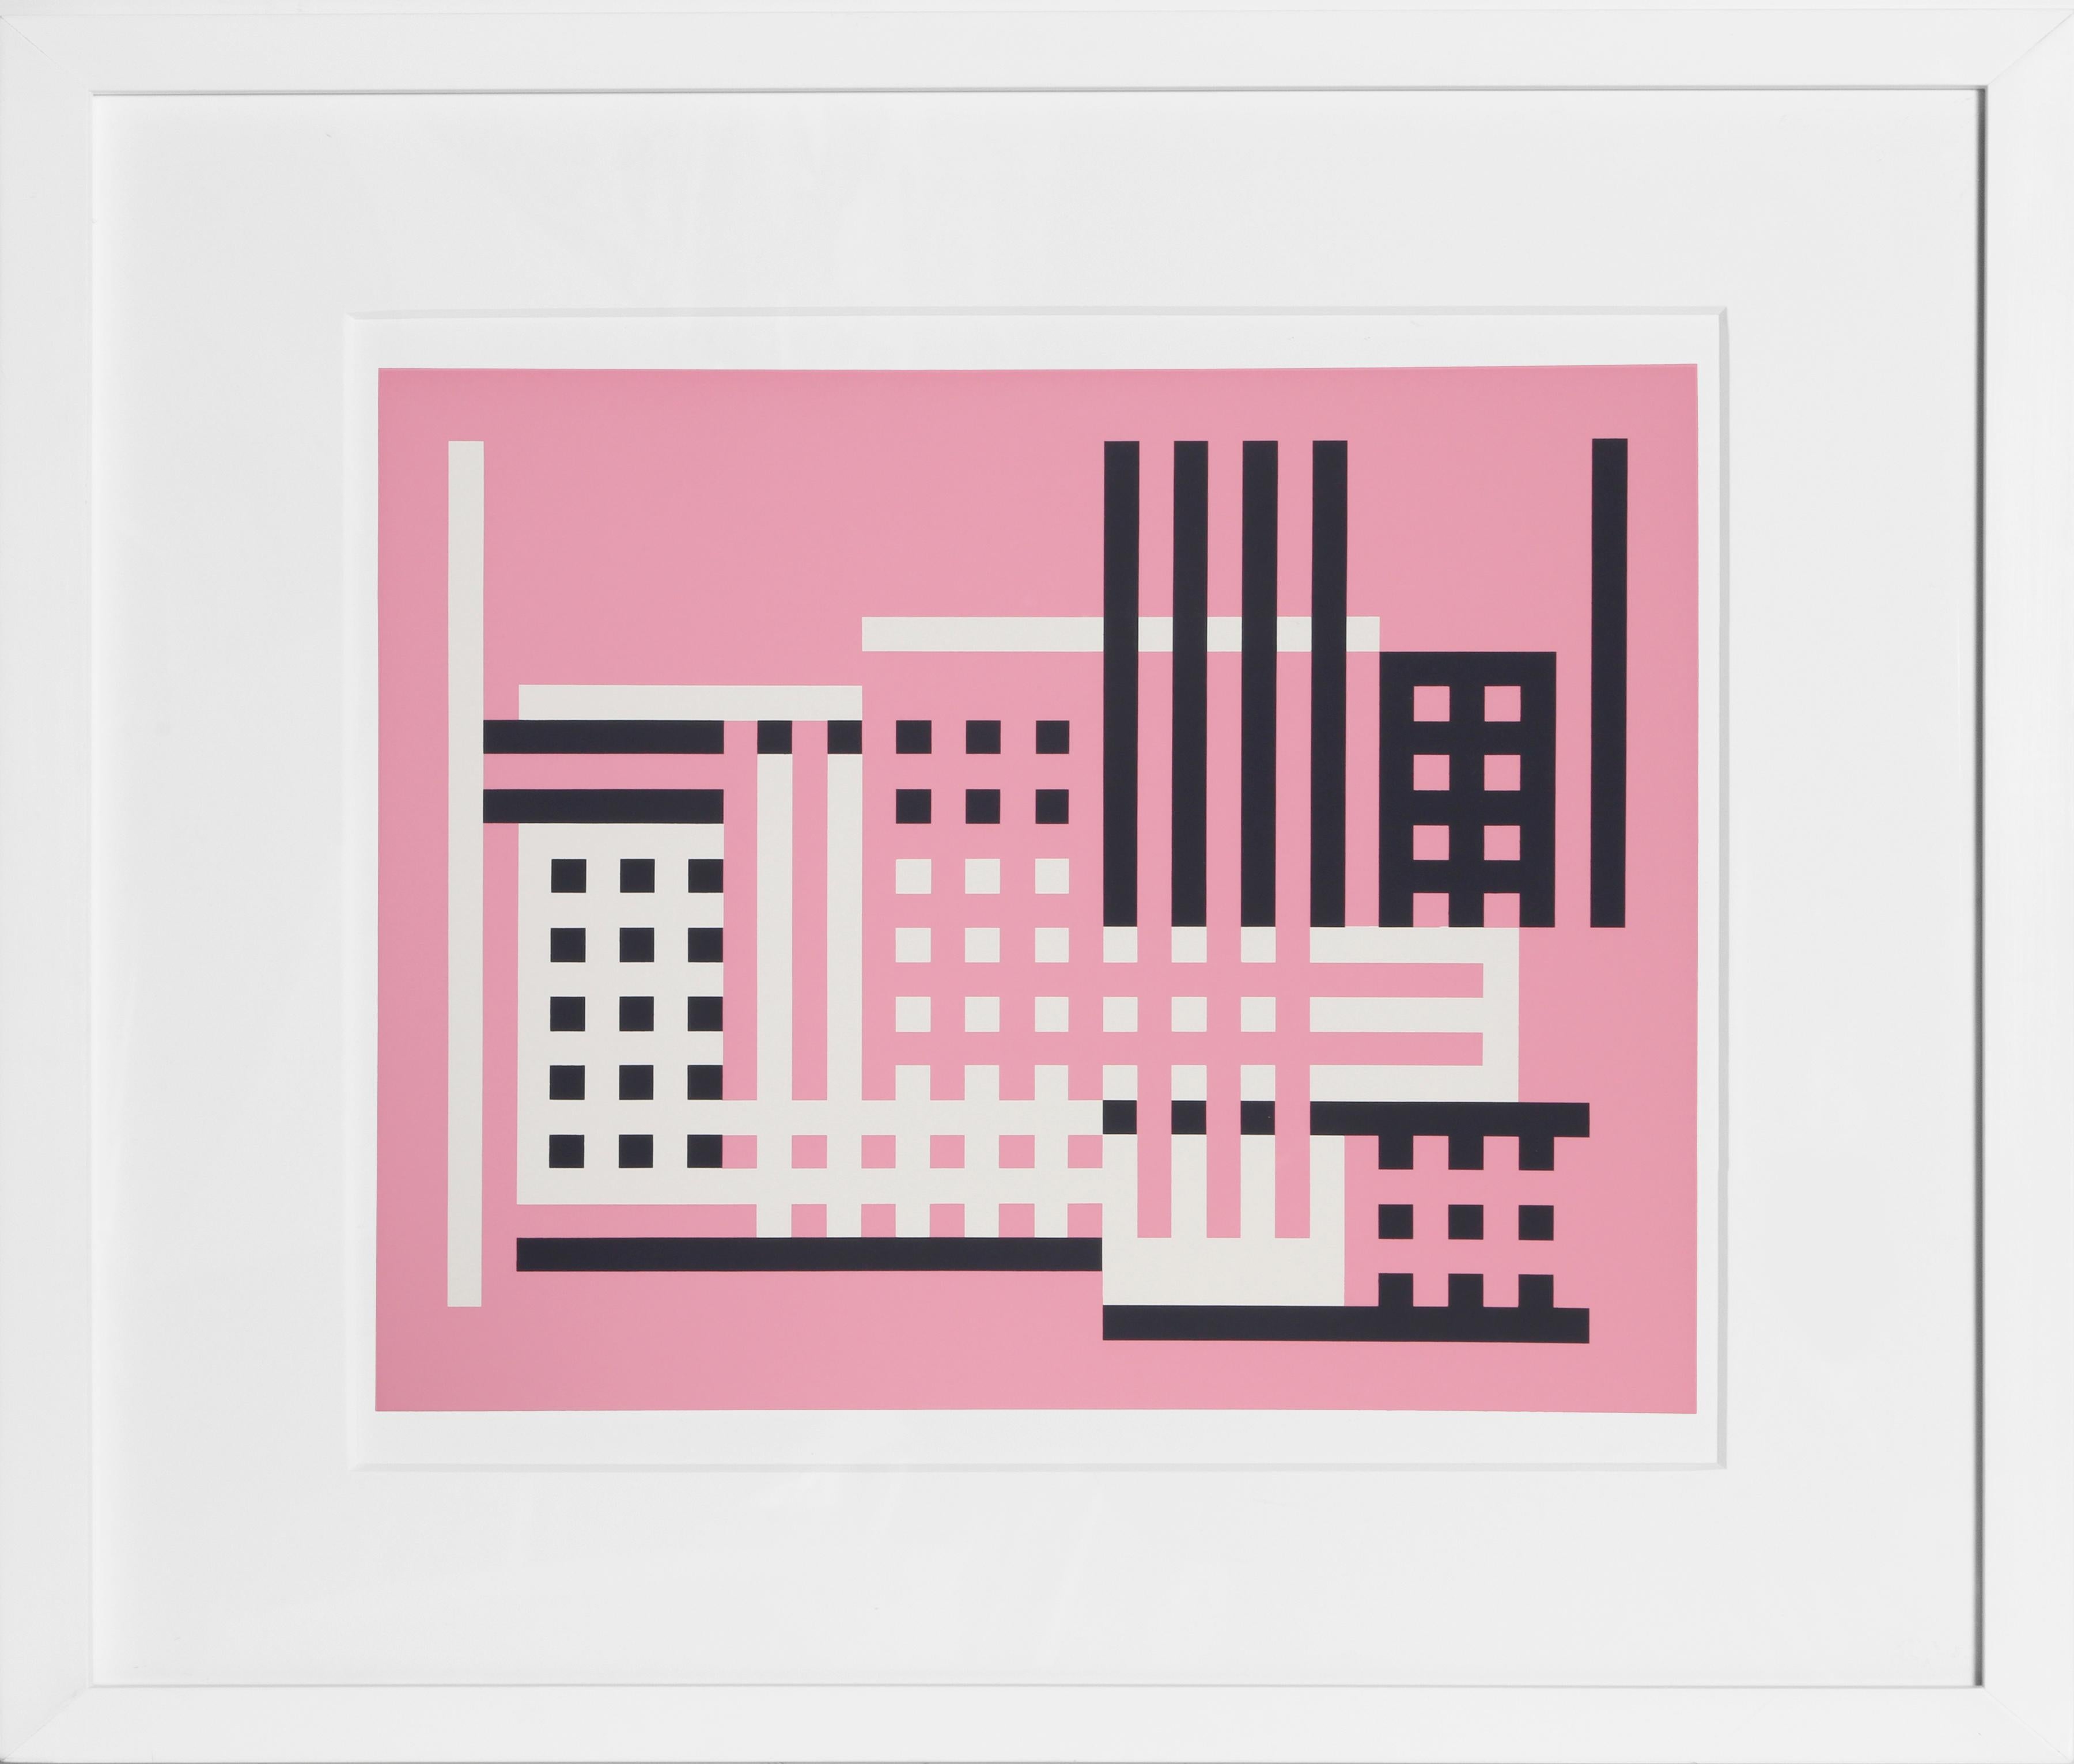 Artist:	Josef Albers
Title:	Portfolio 1, Folder 24, Image 2 from Portfolio: Formulation: Articulation 
Year:	1972
Medium:	Silkscreen
Edition Size:	1000
Paper Size:	15 x 20 inches [38.1 x 50.8 cm] 
Frame: 19 x 24 inches